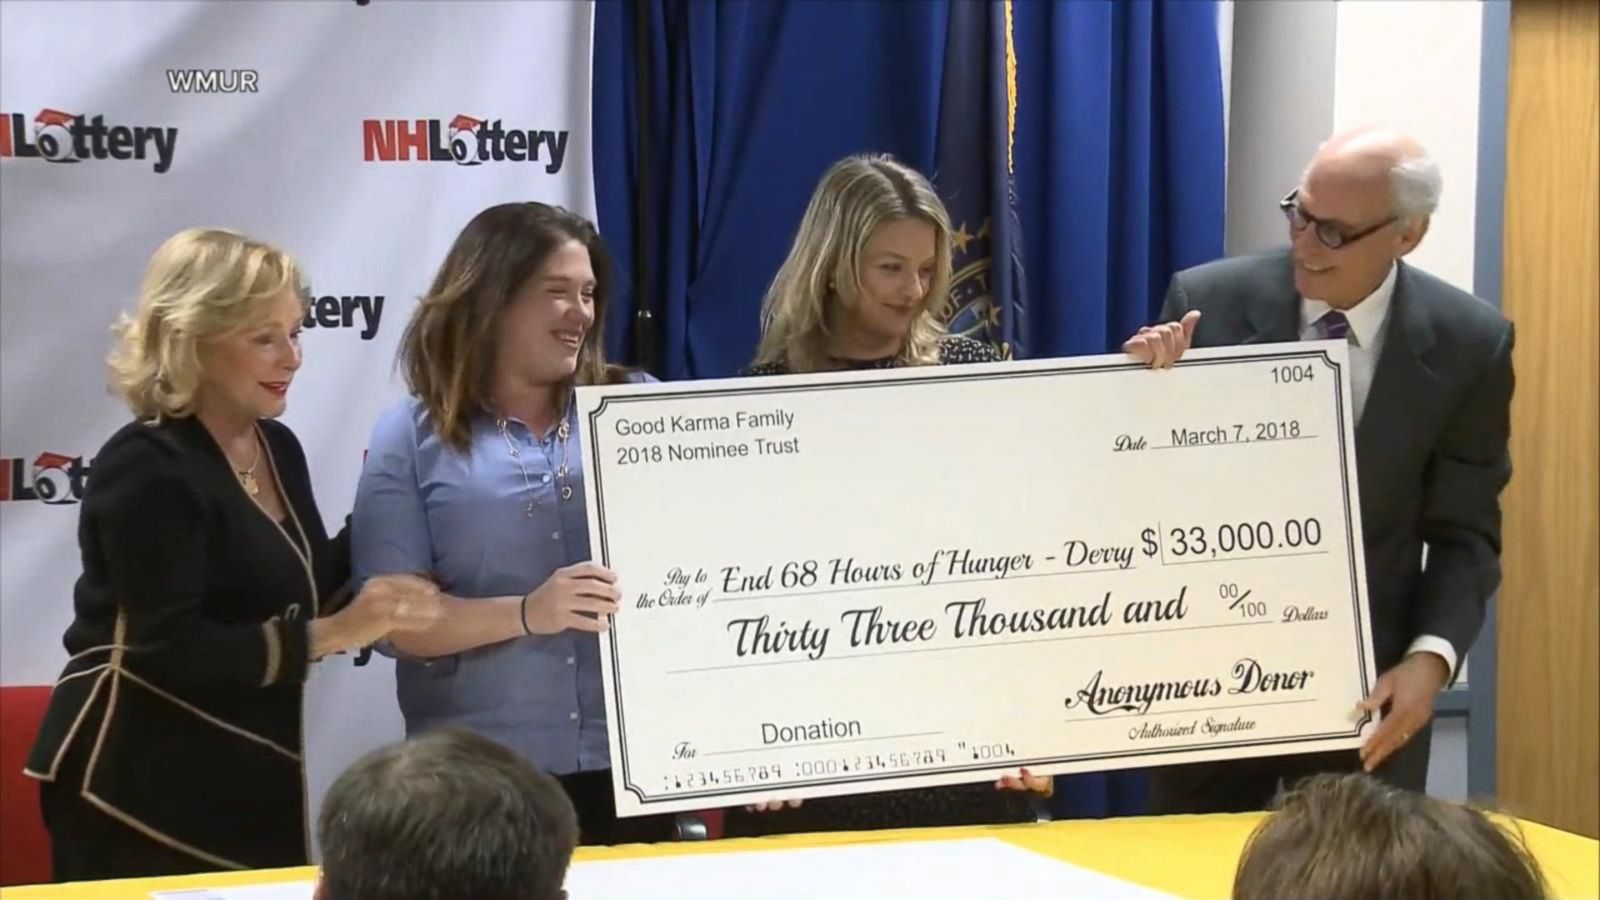 VIDEO: Winner of $560M Powerball jackpot makes major donations to charities